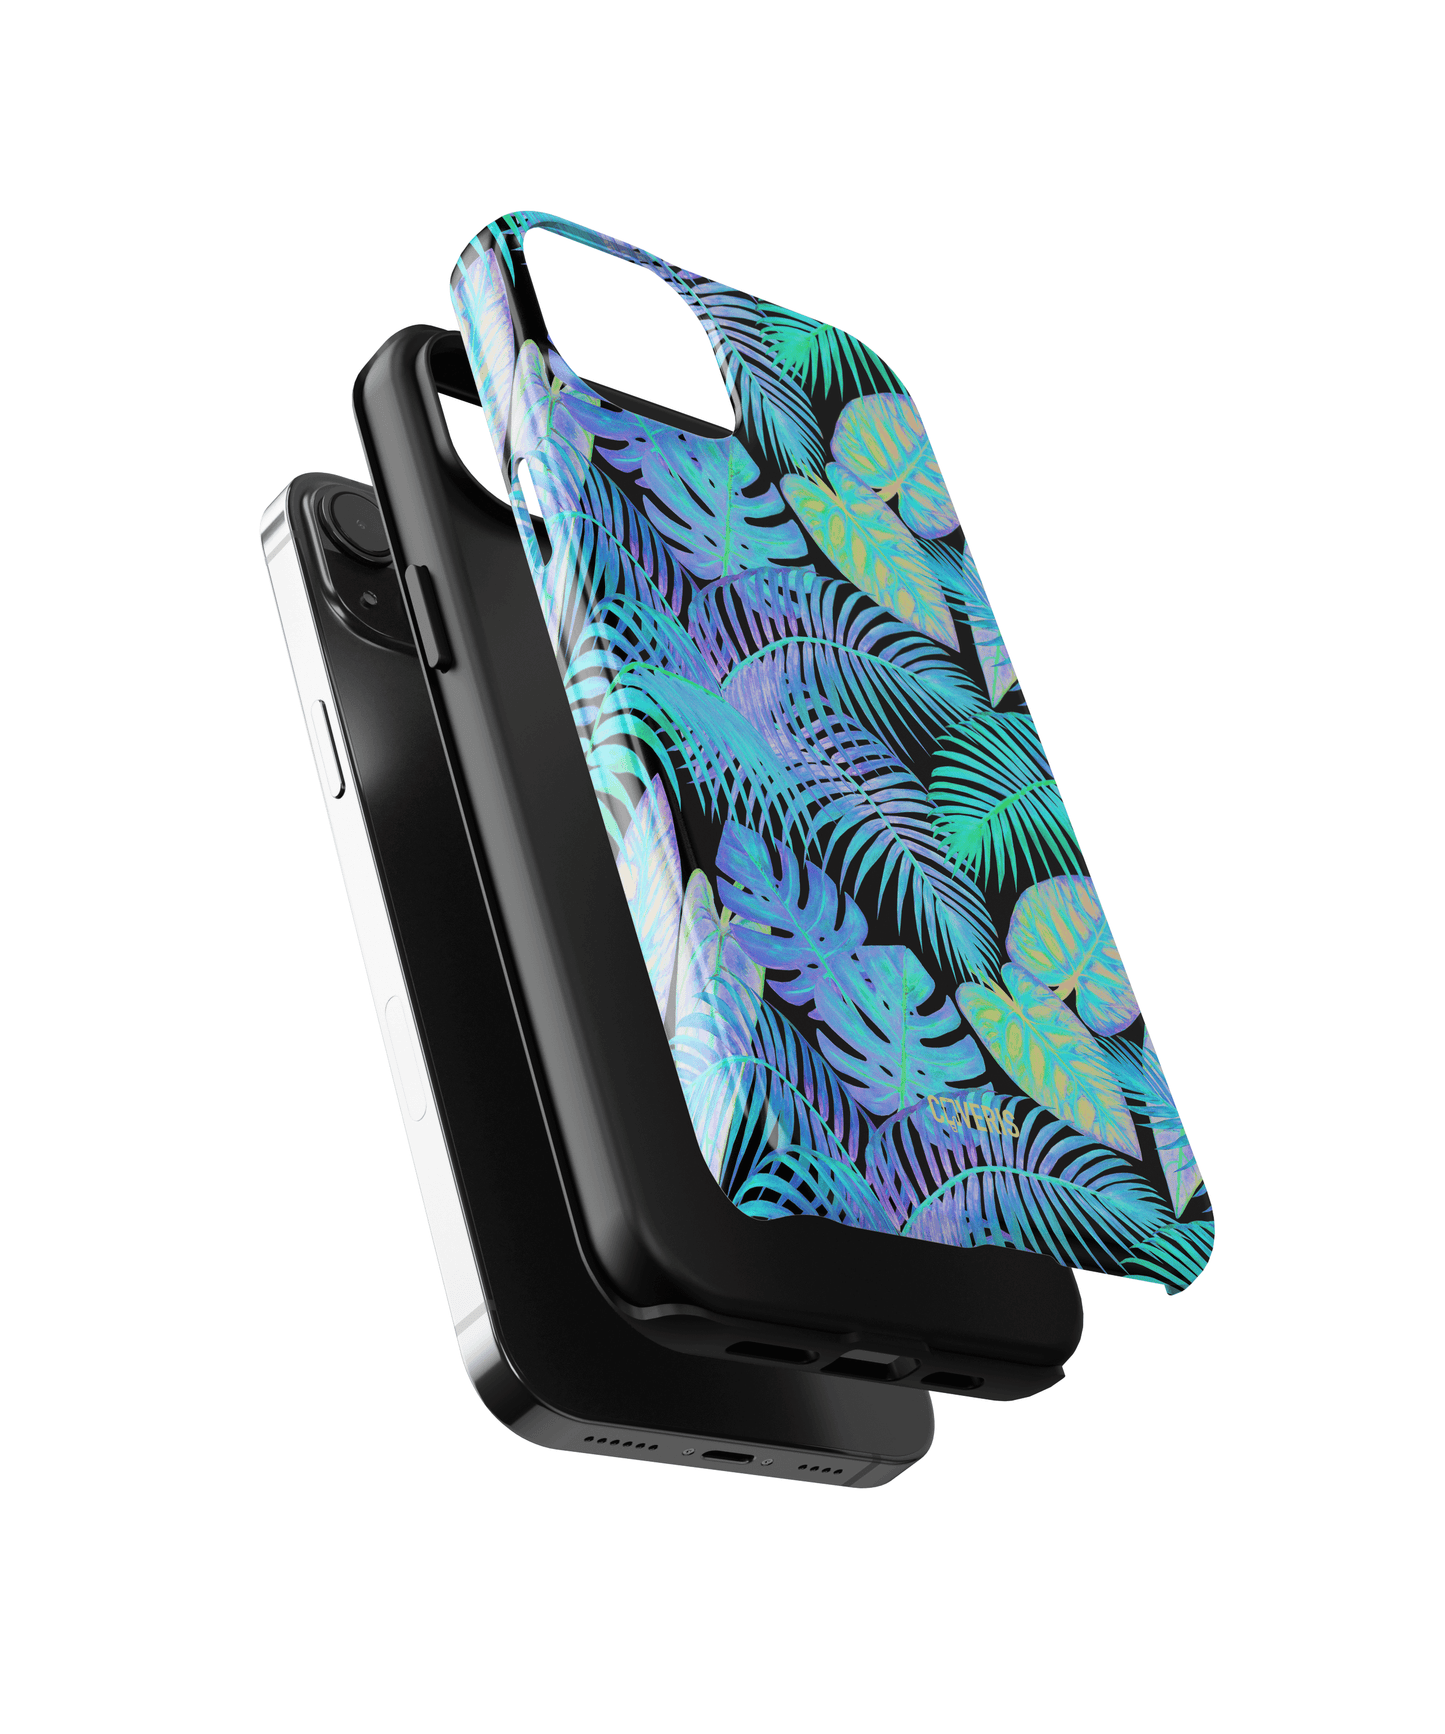 Tropic - iPhone 11 phone case